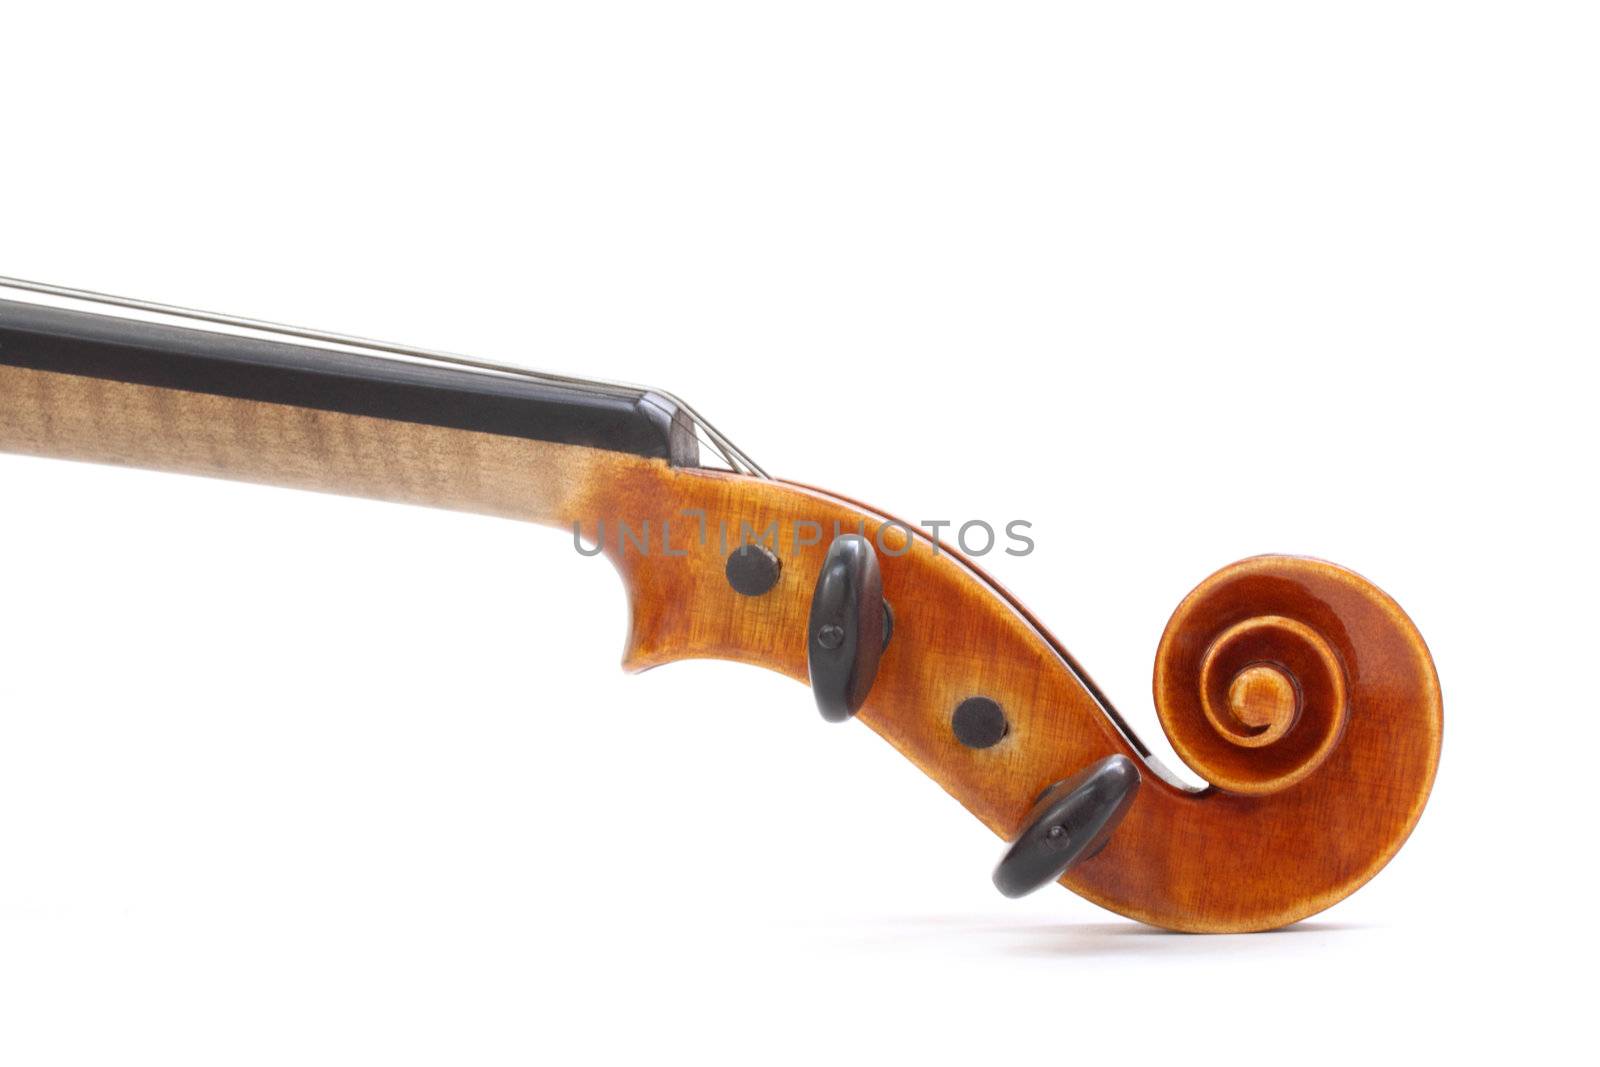 Violin scroll by melpomene